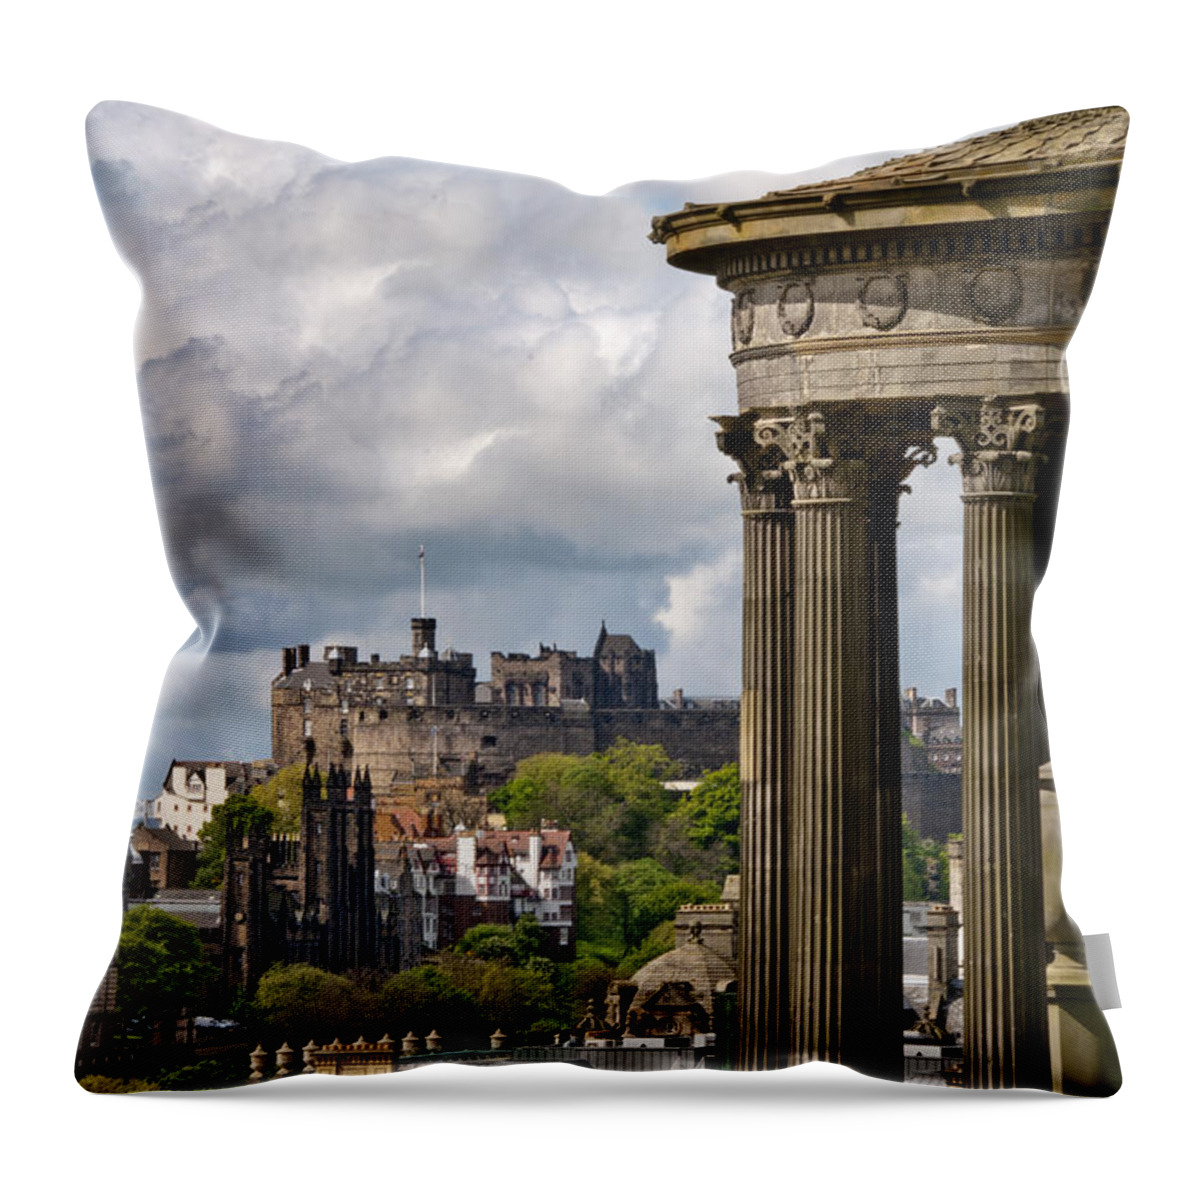 Edinburgh Throw Pillow featuring the photograph Edinburgh Castle by Marion Galt